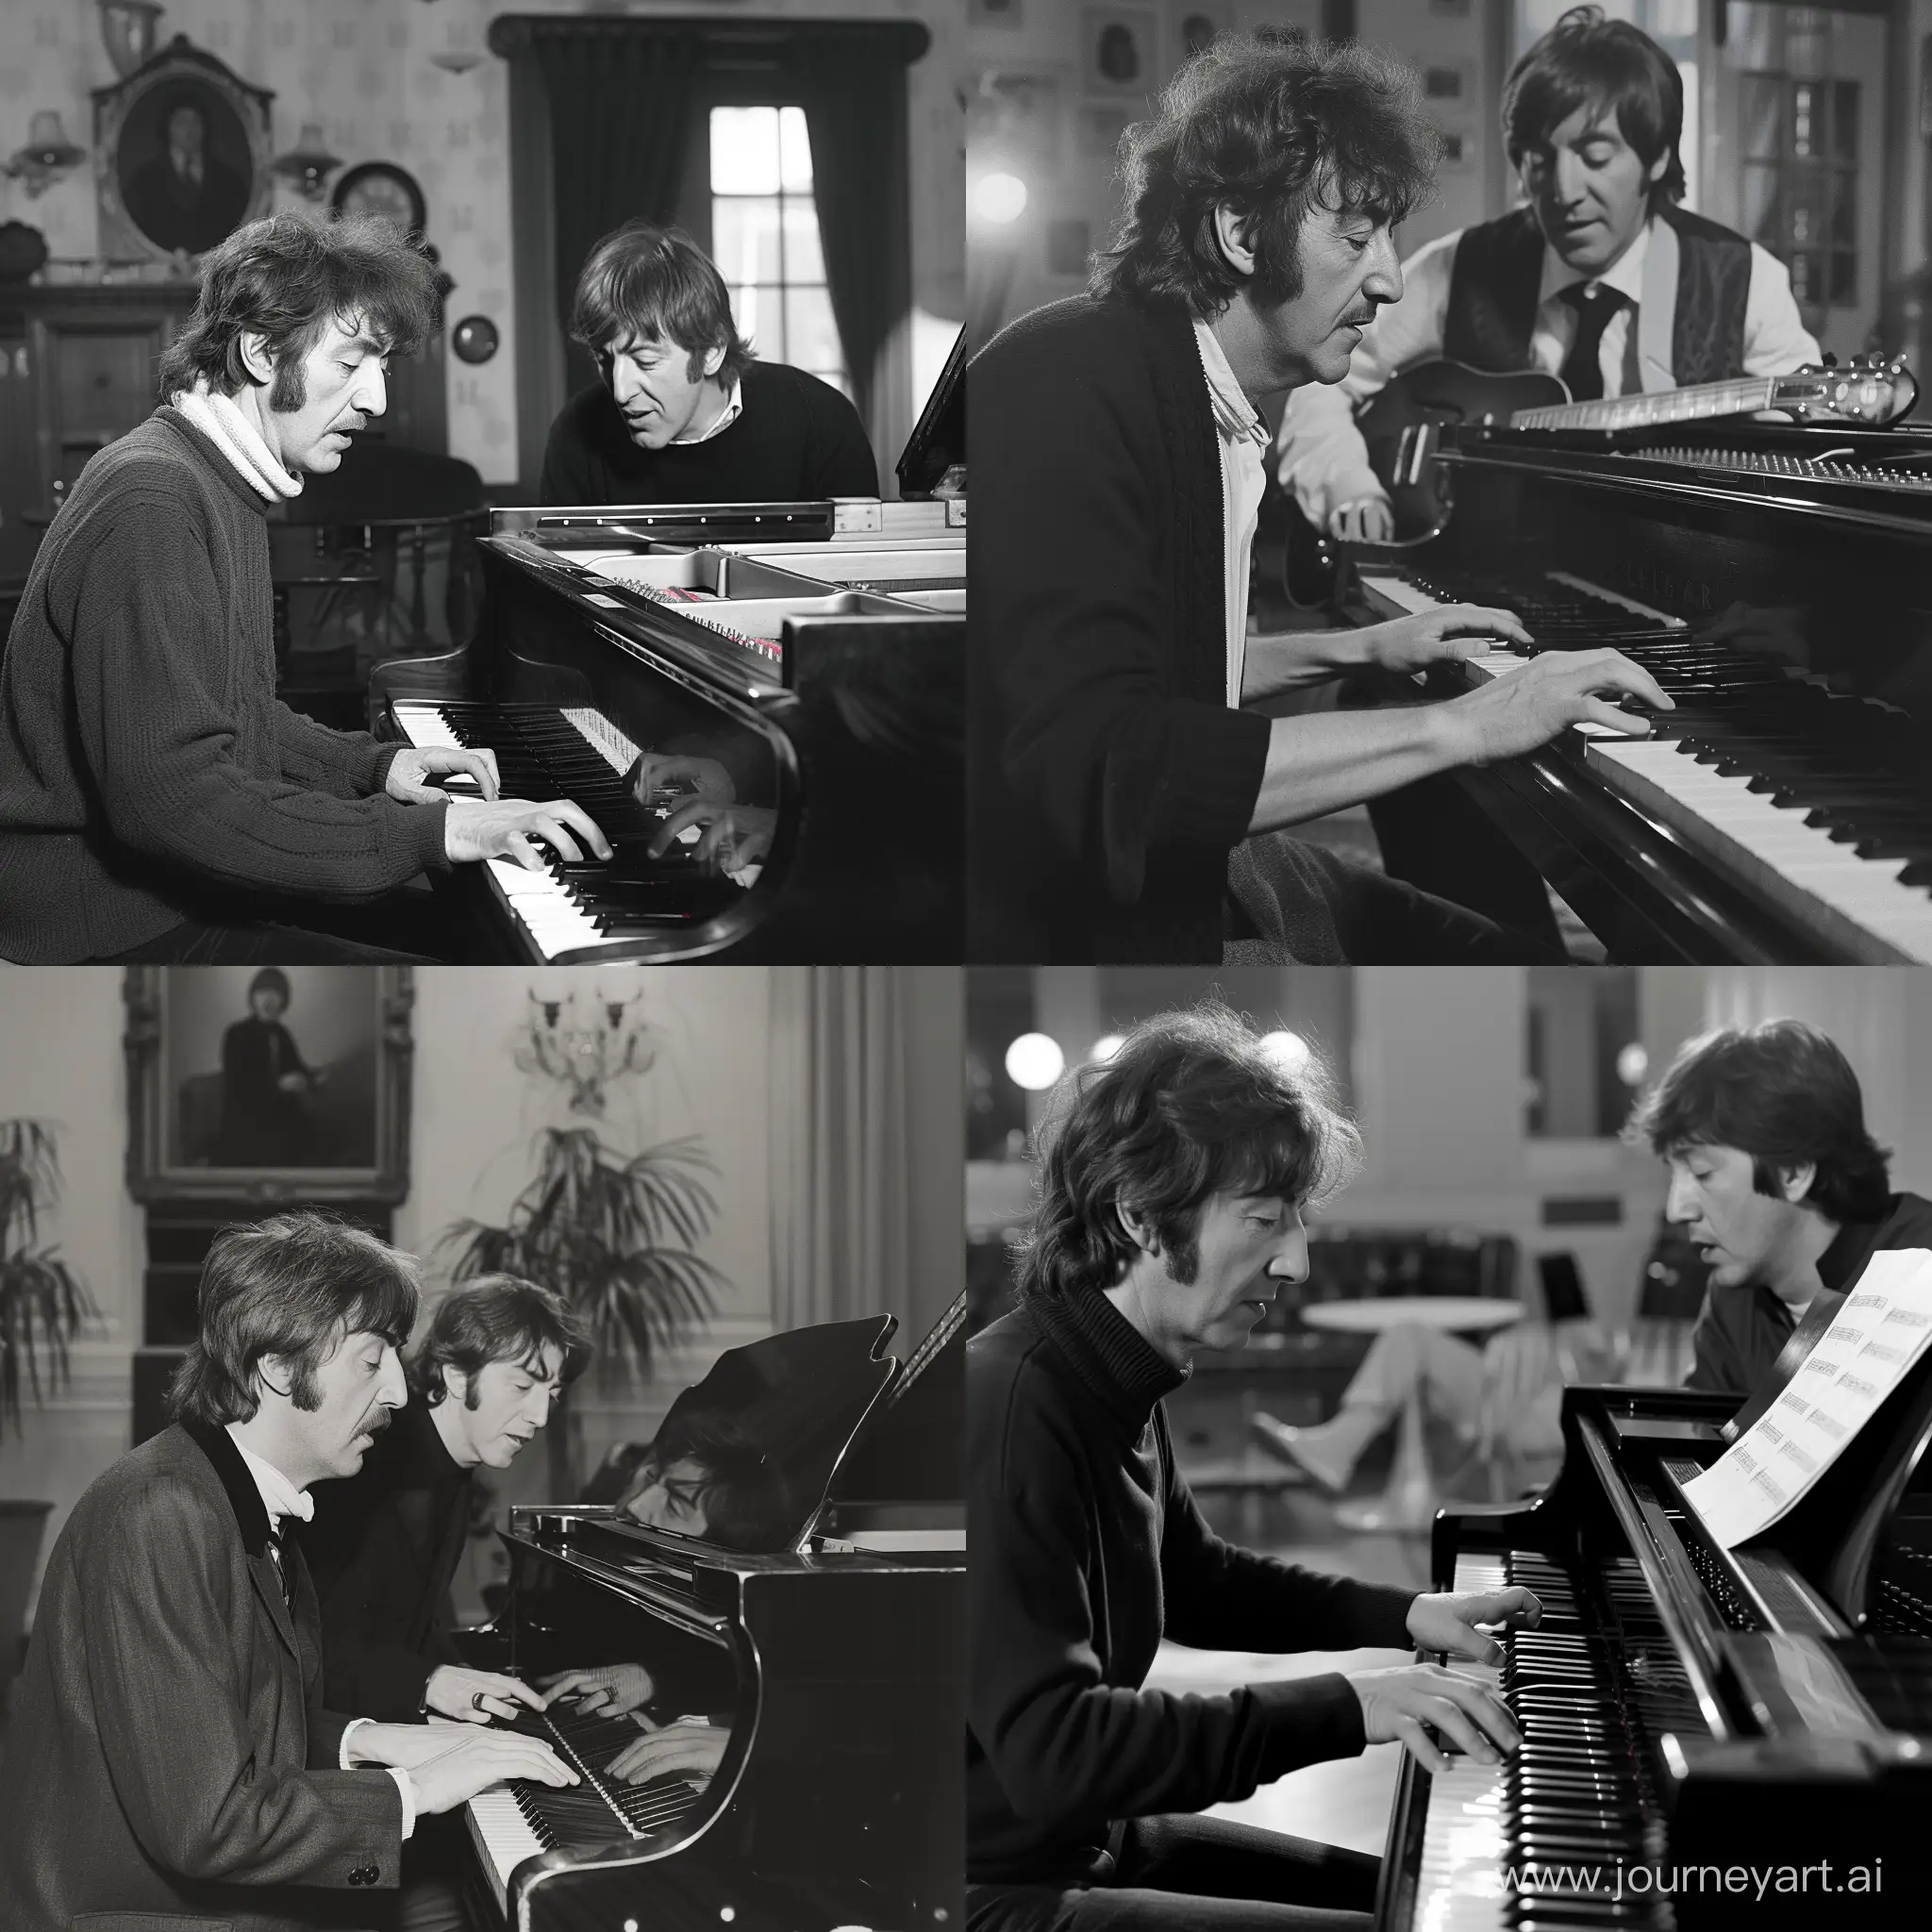  John Lennon plays on piano with Paul McCartney photo style